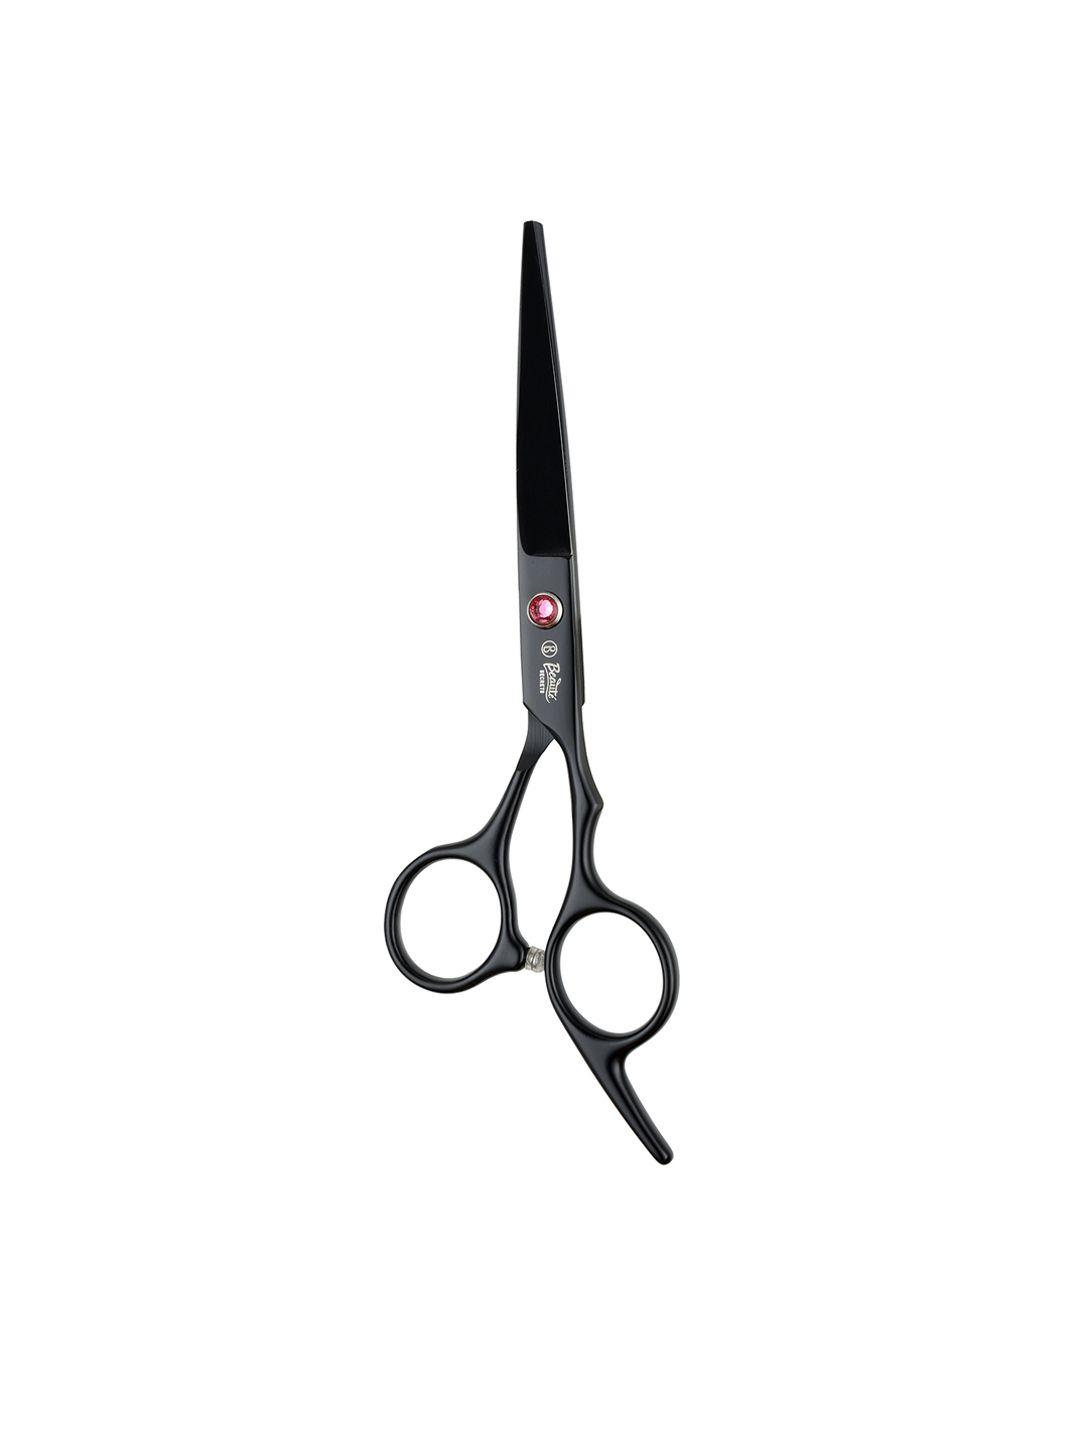 beaute secrets professional extremely sharp blades hair scissors - black